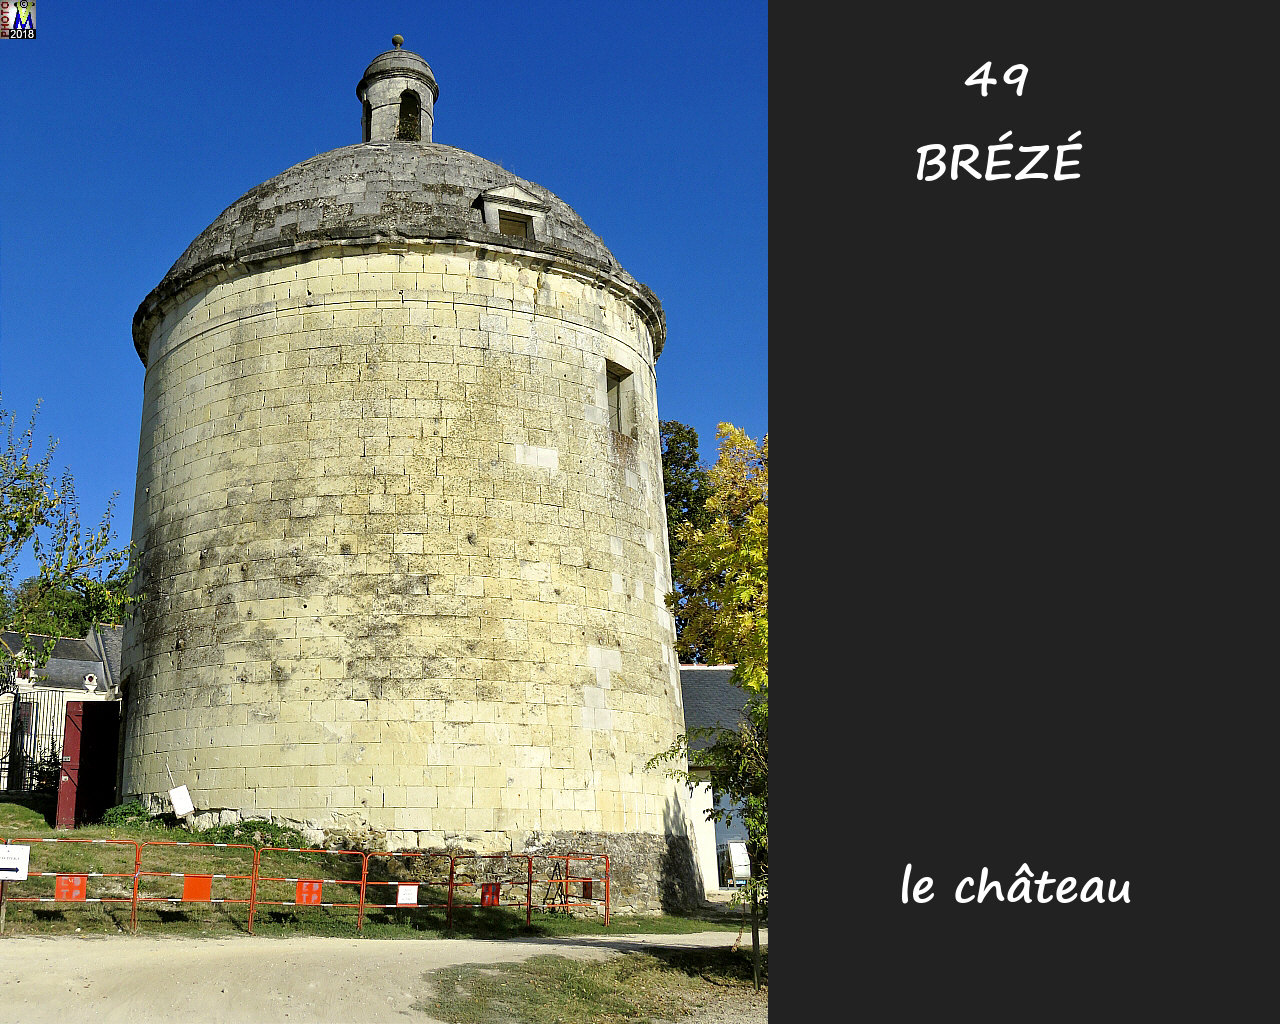 49BREZE_chateau_1400.jpg